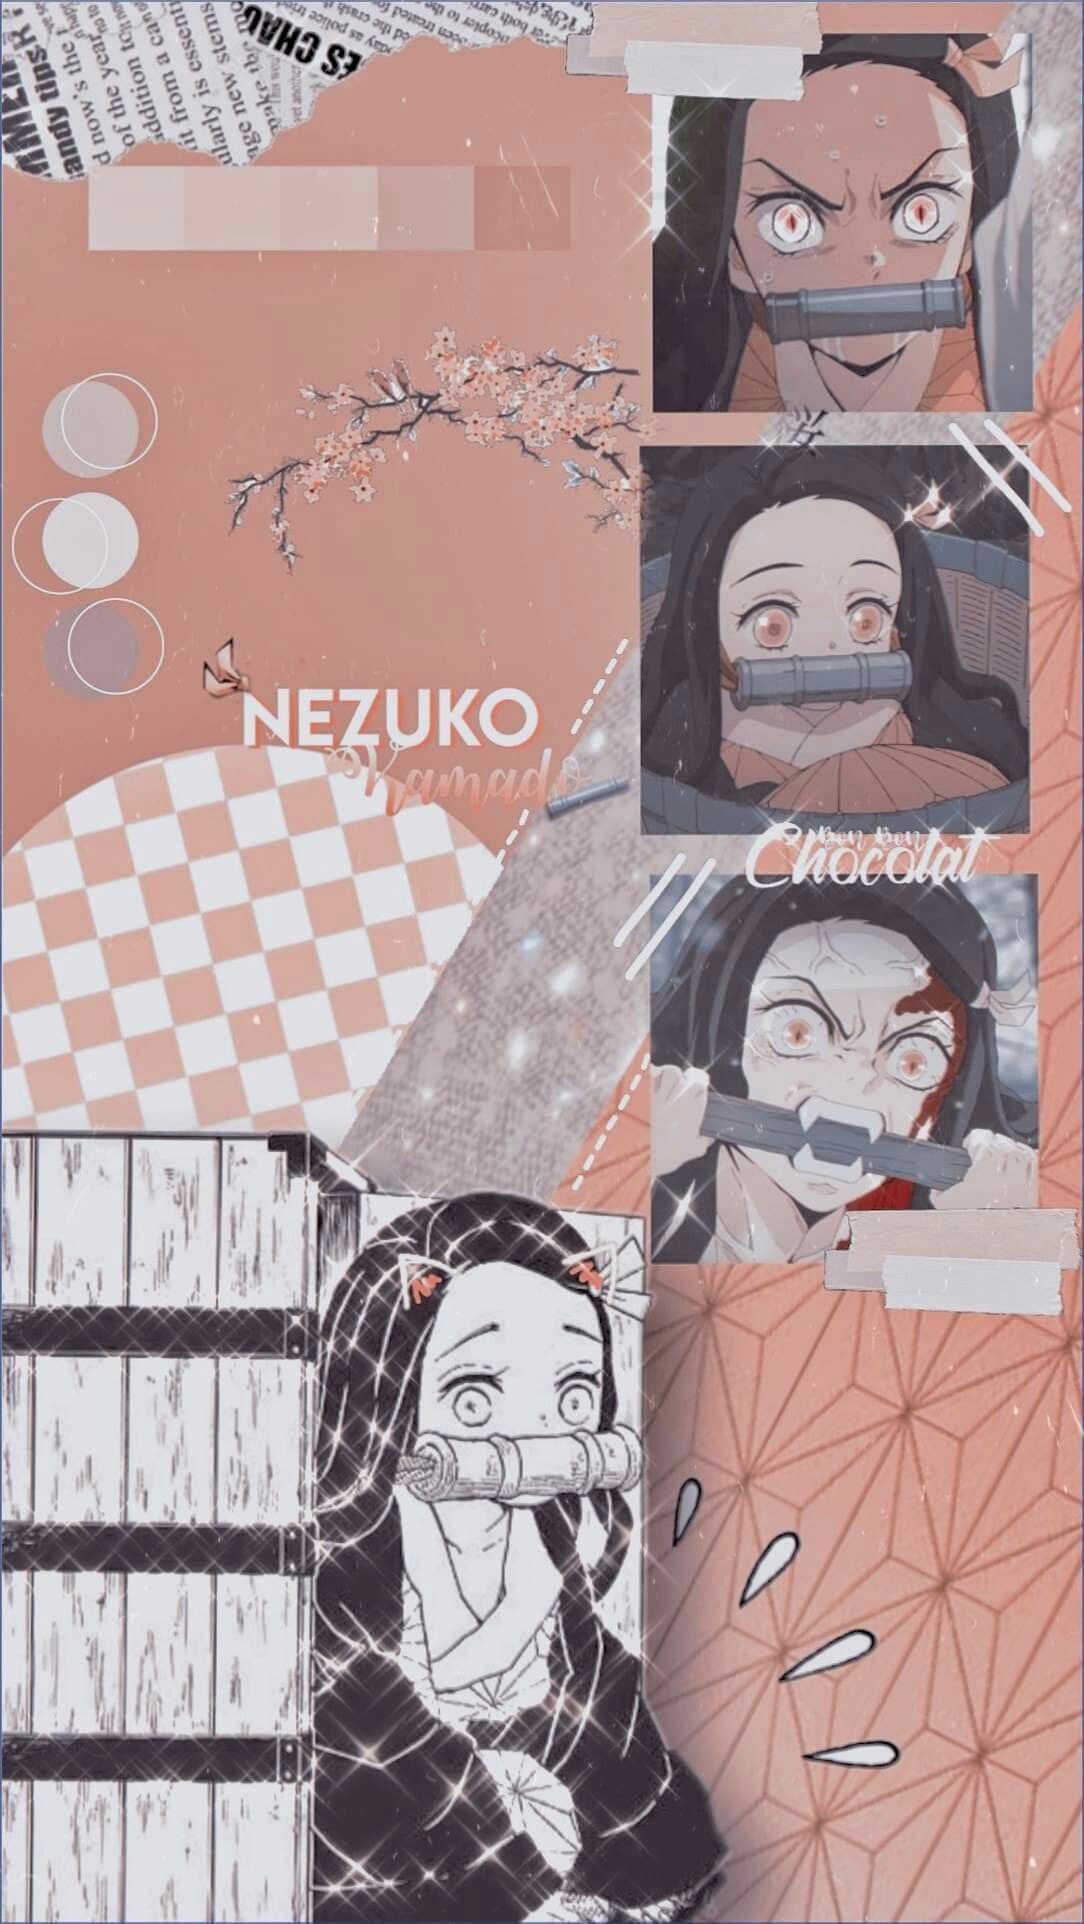 Aesthetic nezuko wallpapers by me! I hope you like them! - Nezuko